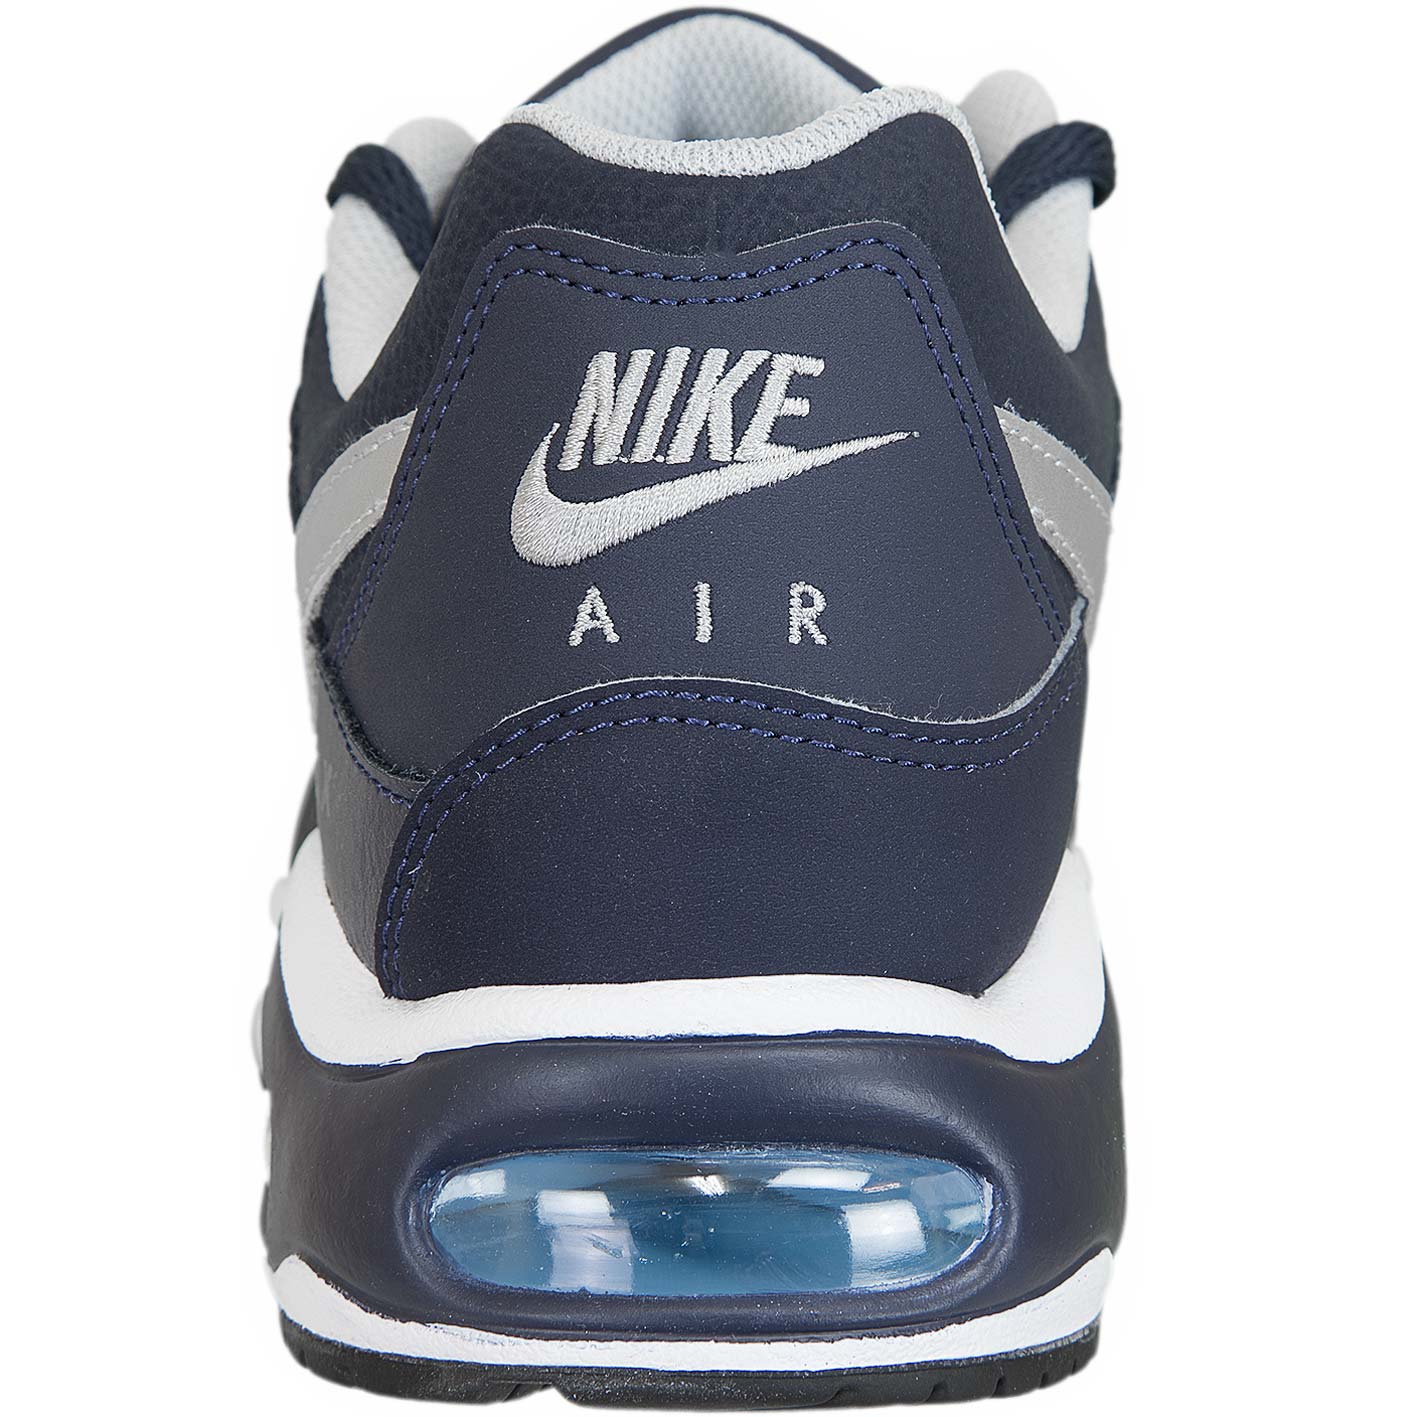 ☆ Nike Sneaker Air Max Command Leather dunkelblau/silber - hier bestellen!